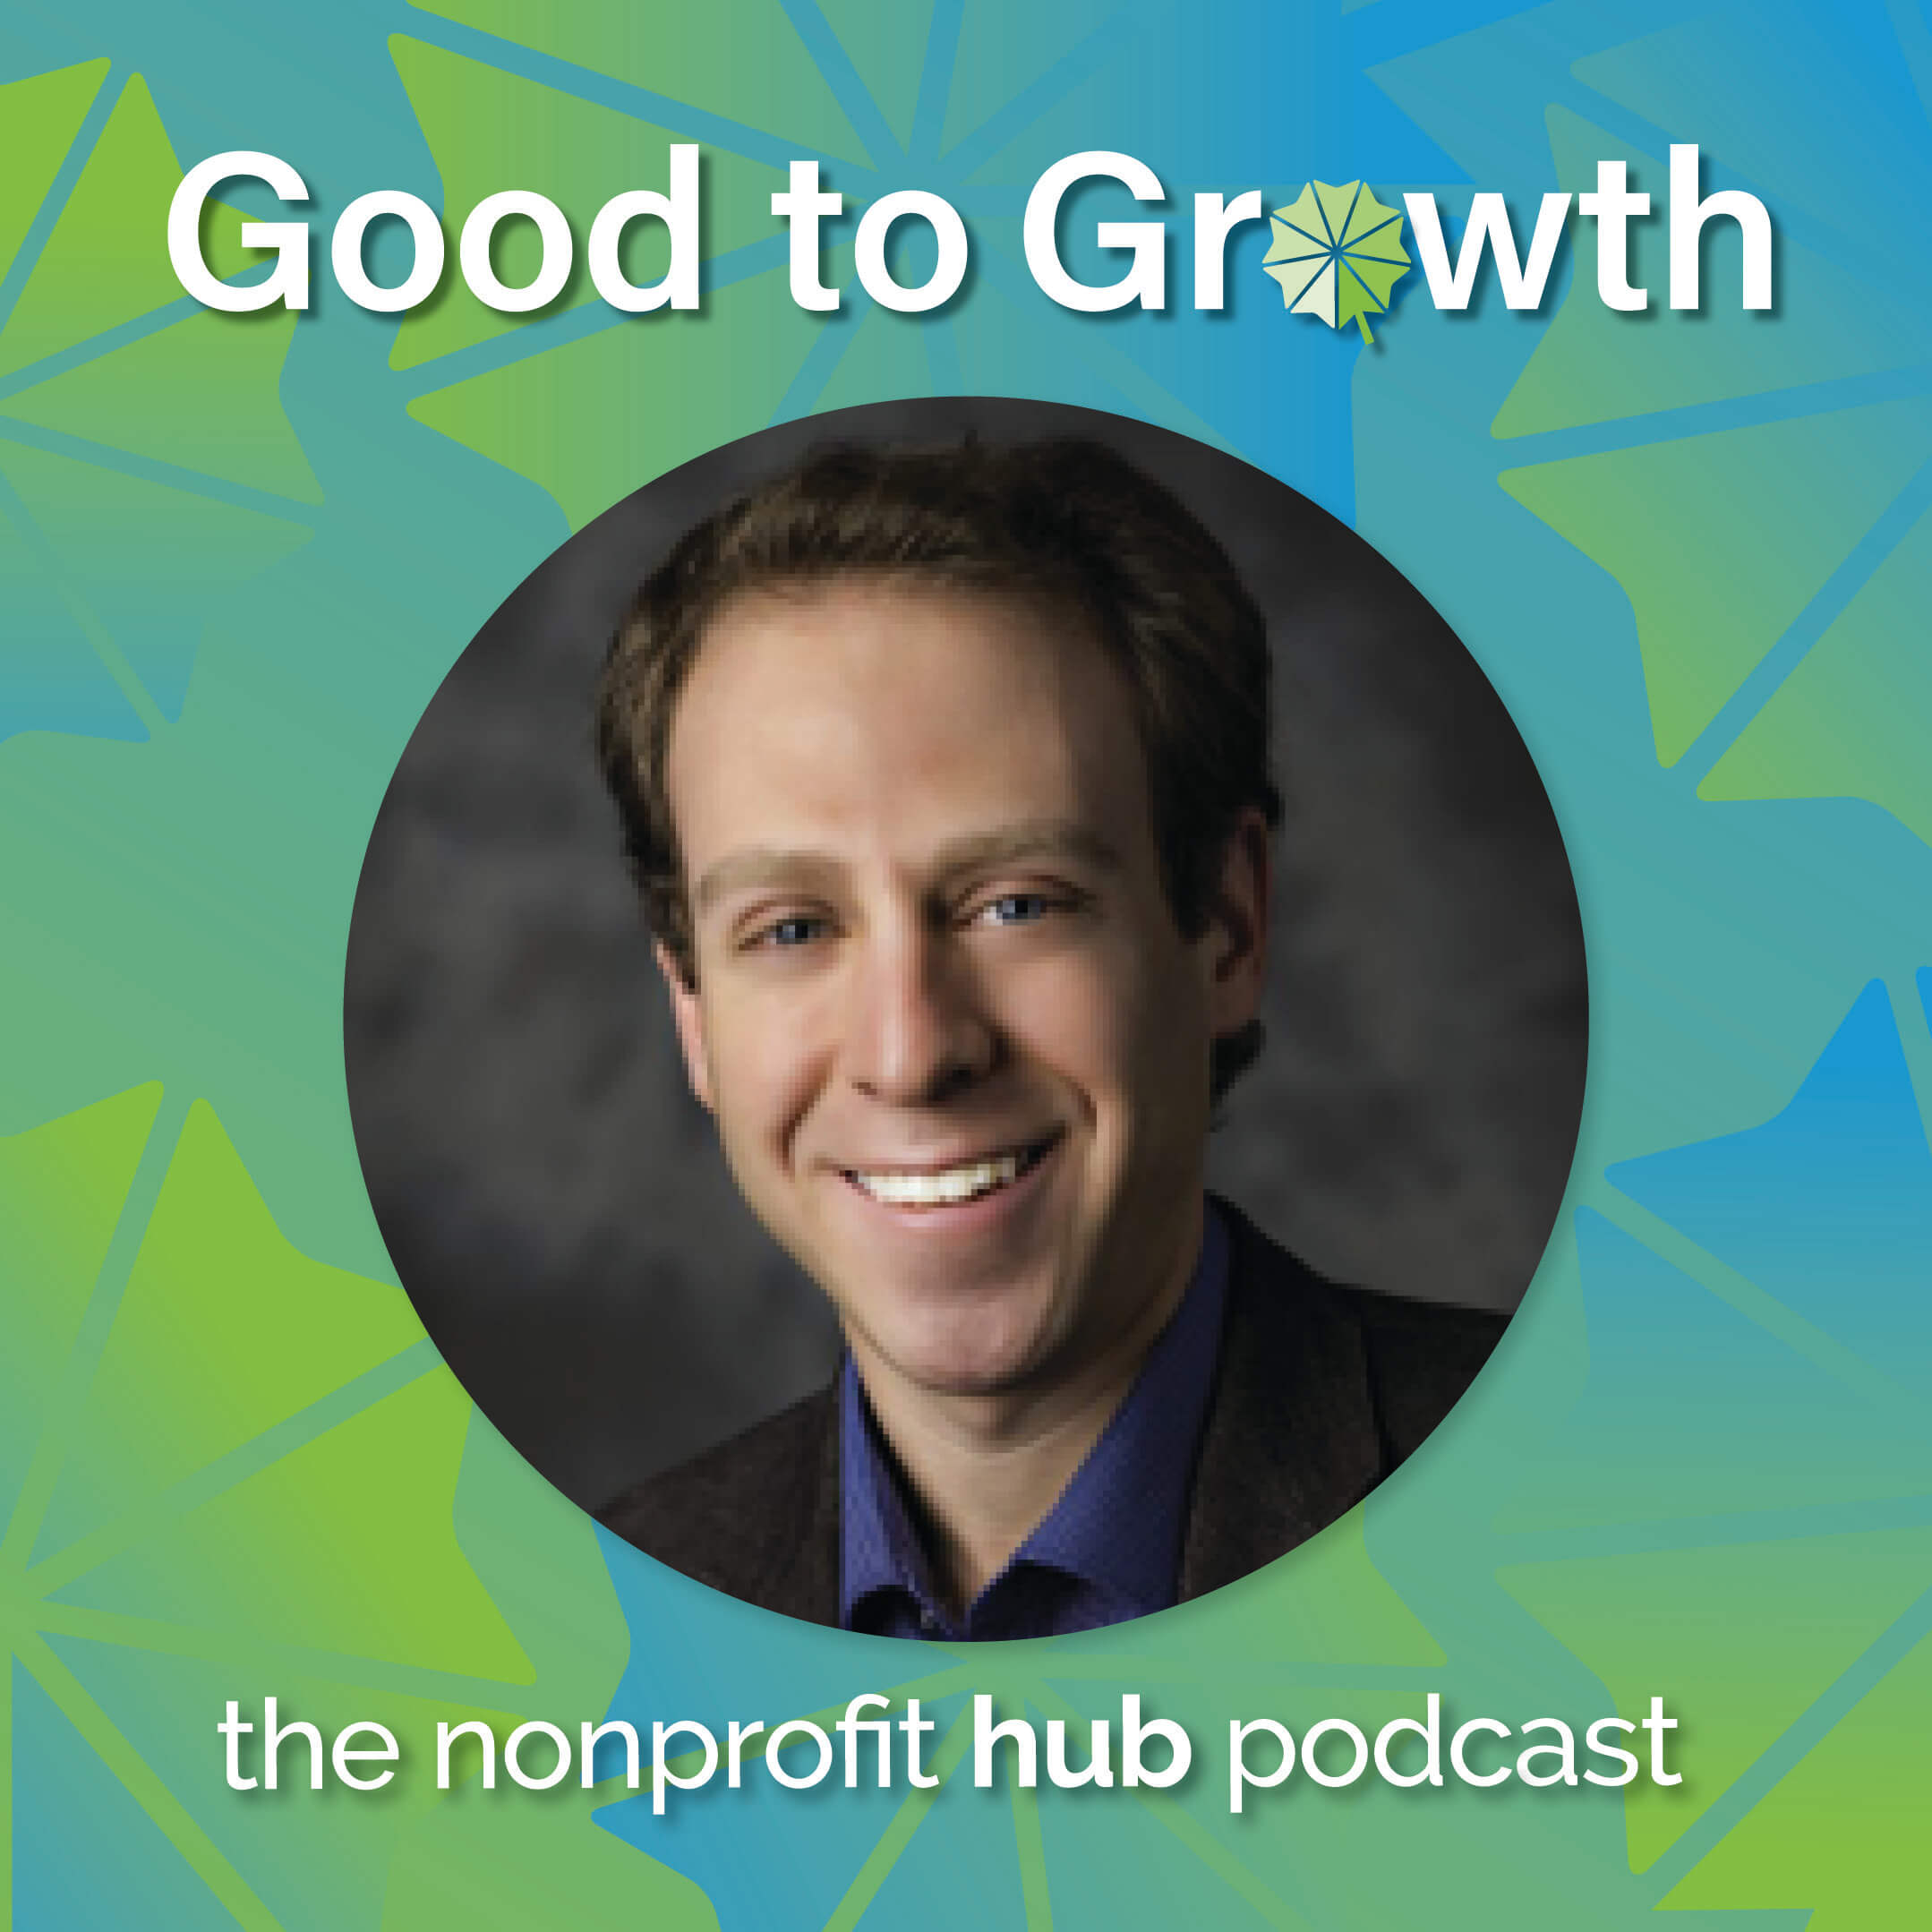 Josh Kligman Good to Growth Podcast Photo